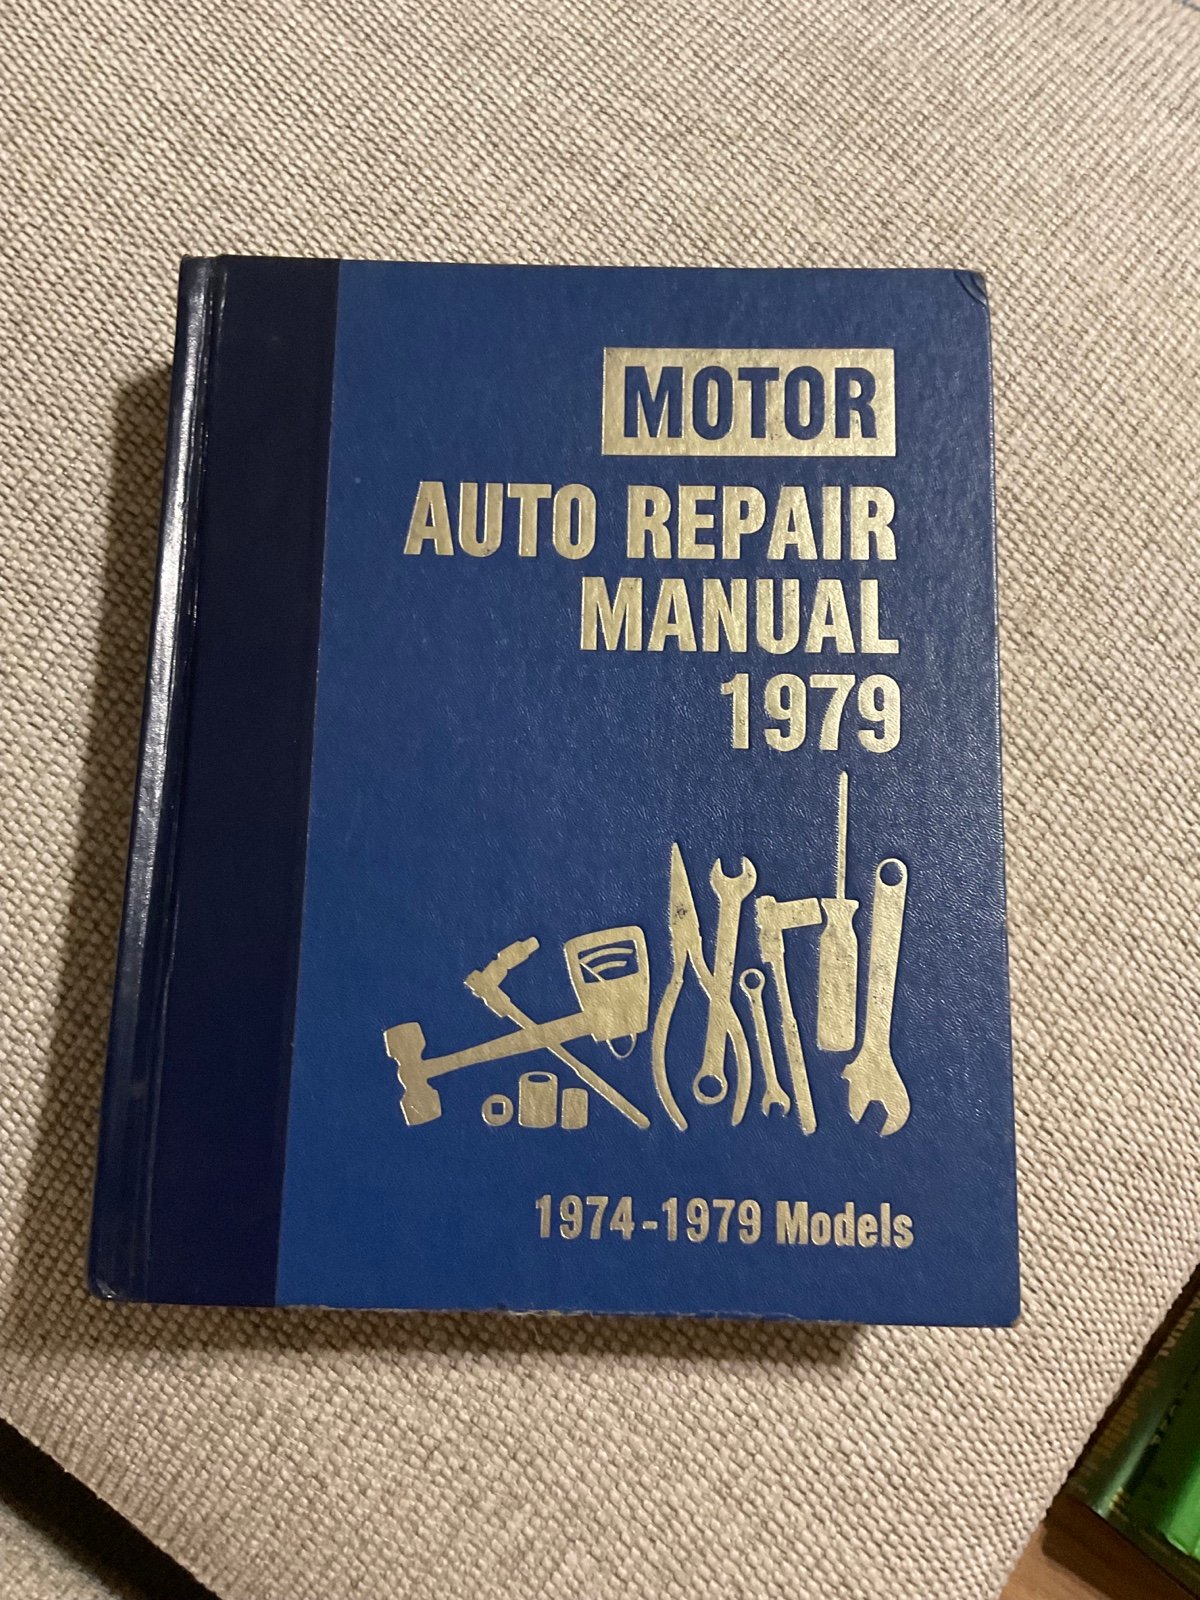 Auto Repair Manual 582wJ7HuQ